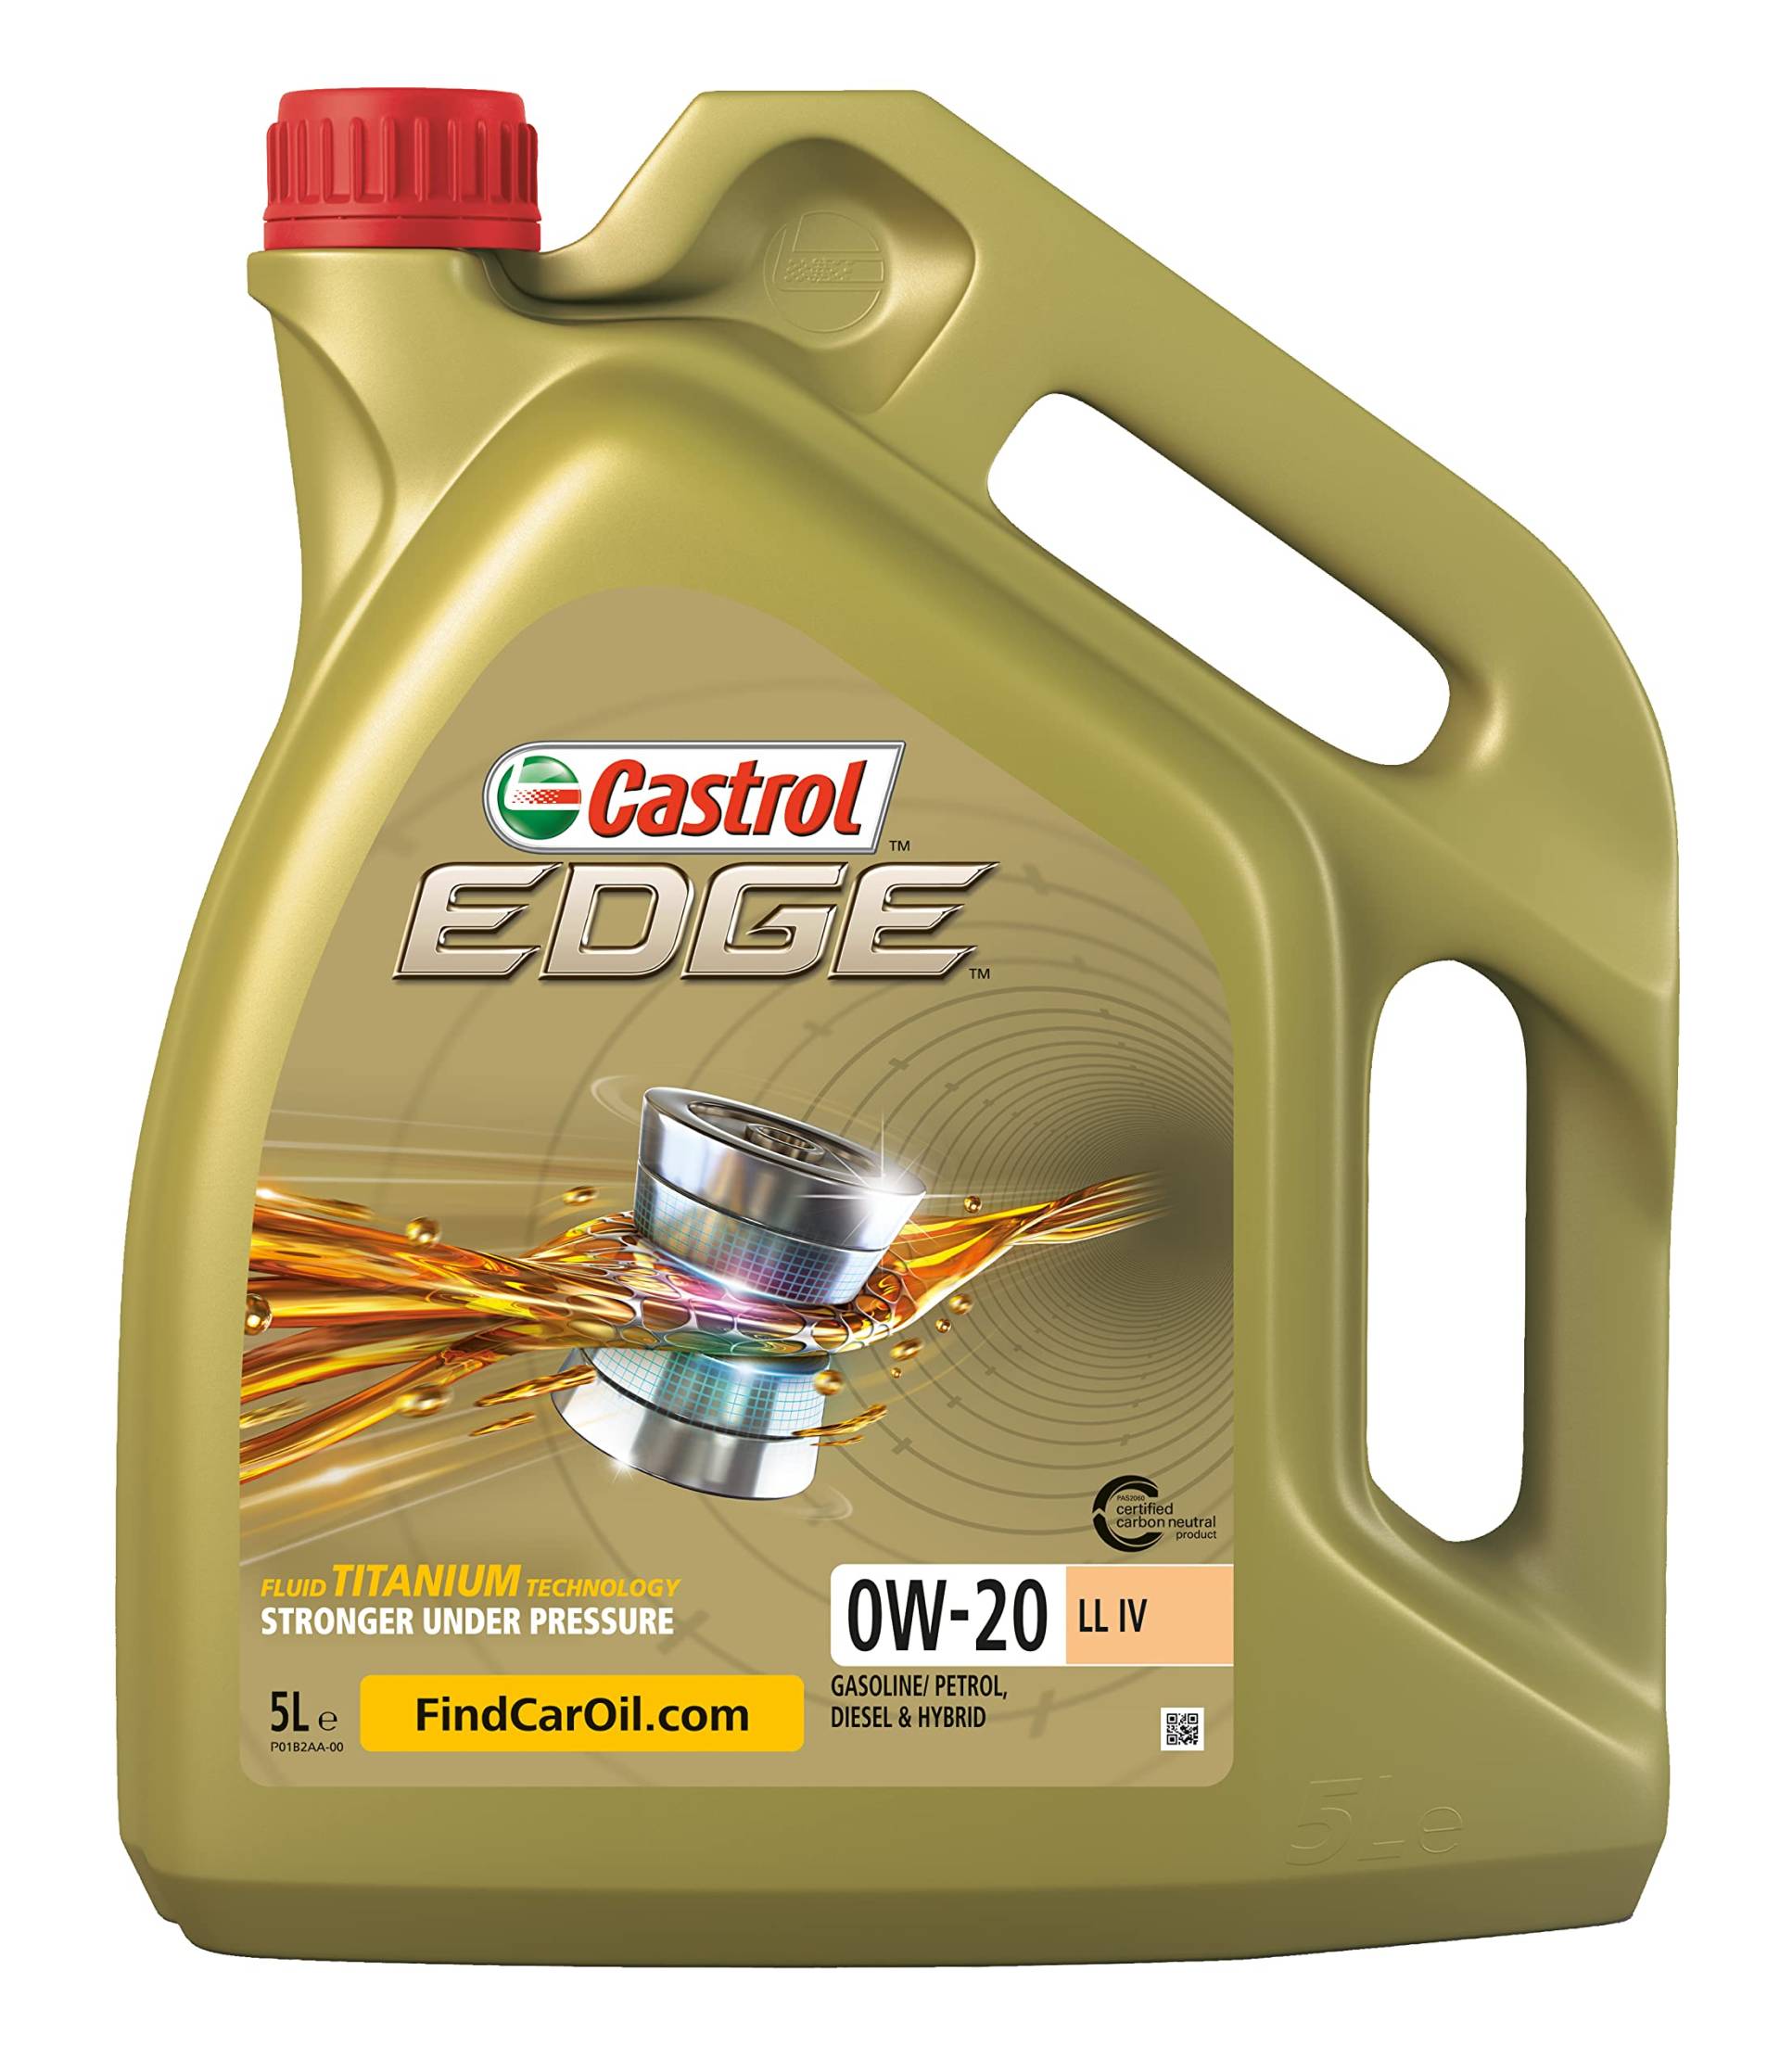 Castrol EDGE 0W-20 LL IV, 5 Liter von Castrol